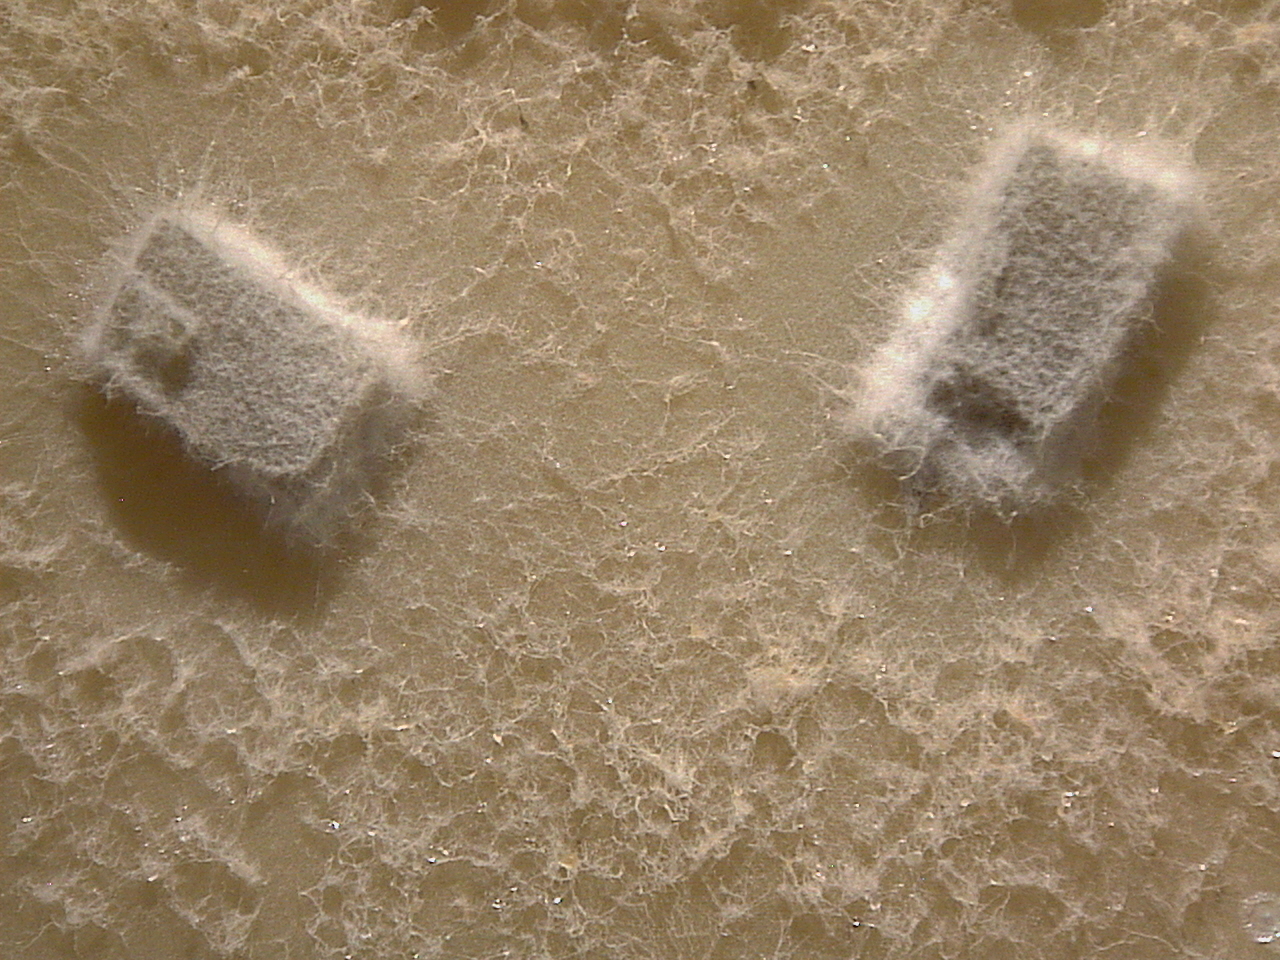 Gelasinospora tetrasperma growing in the lab.